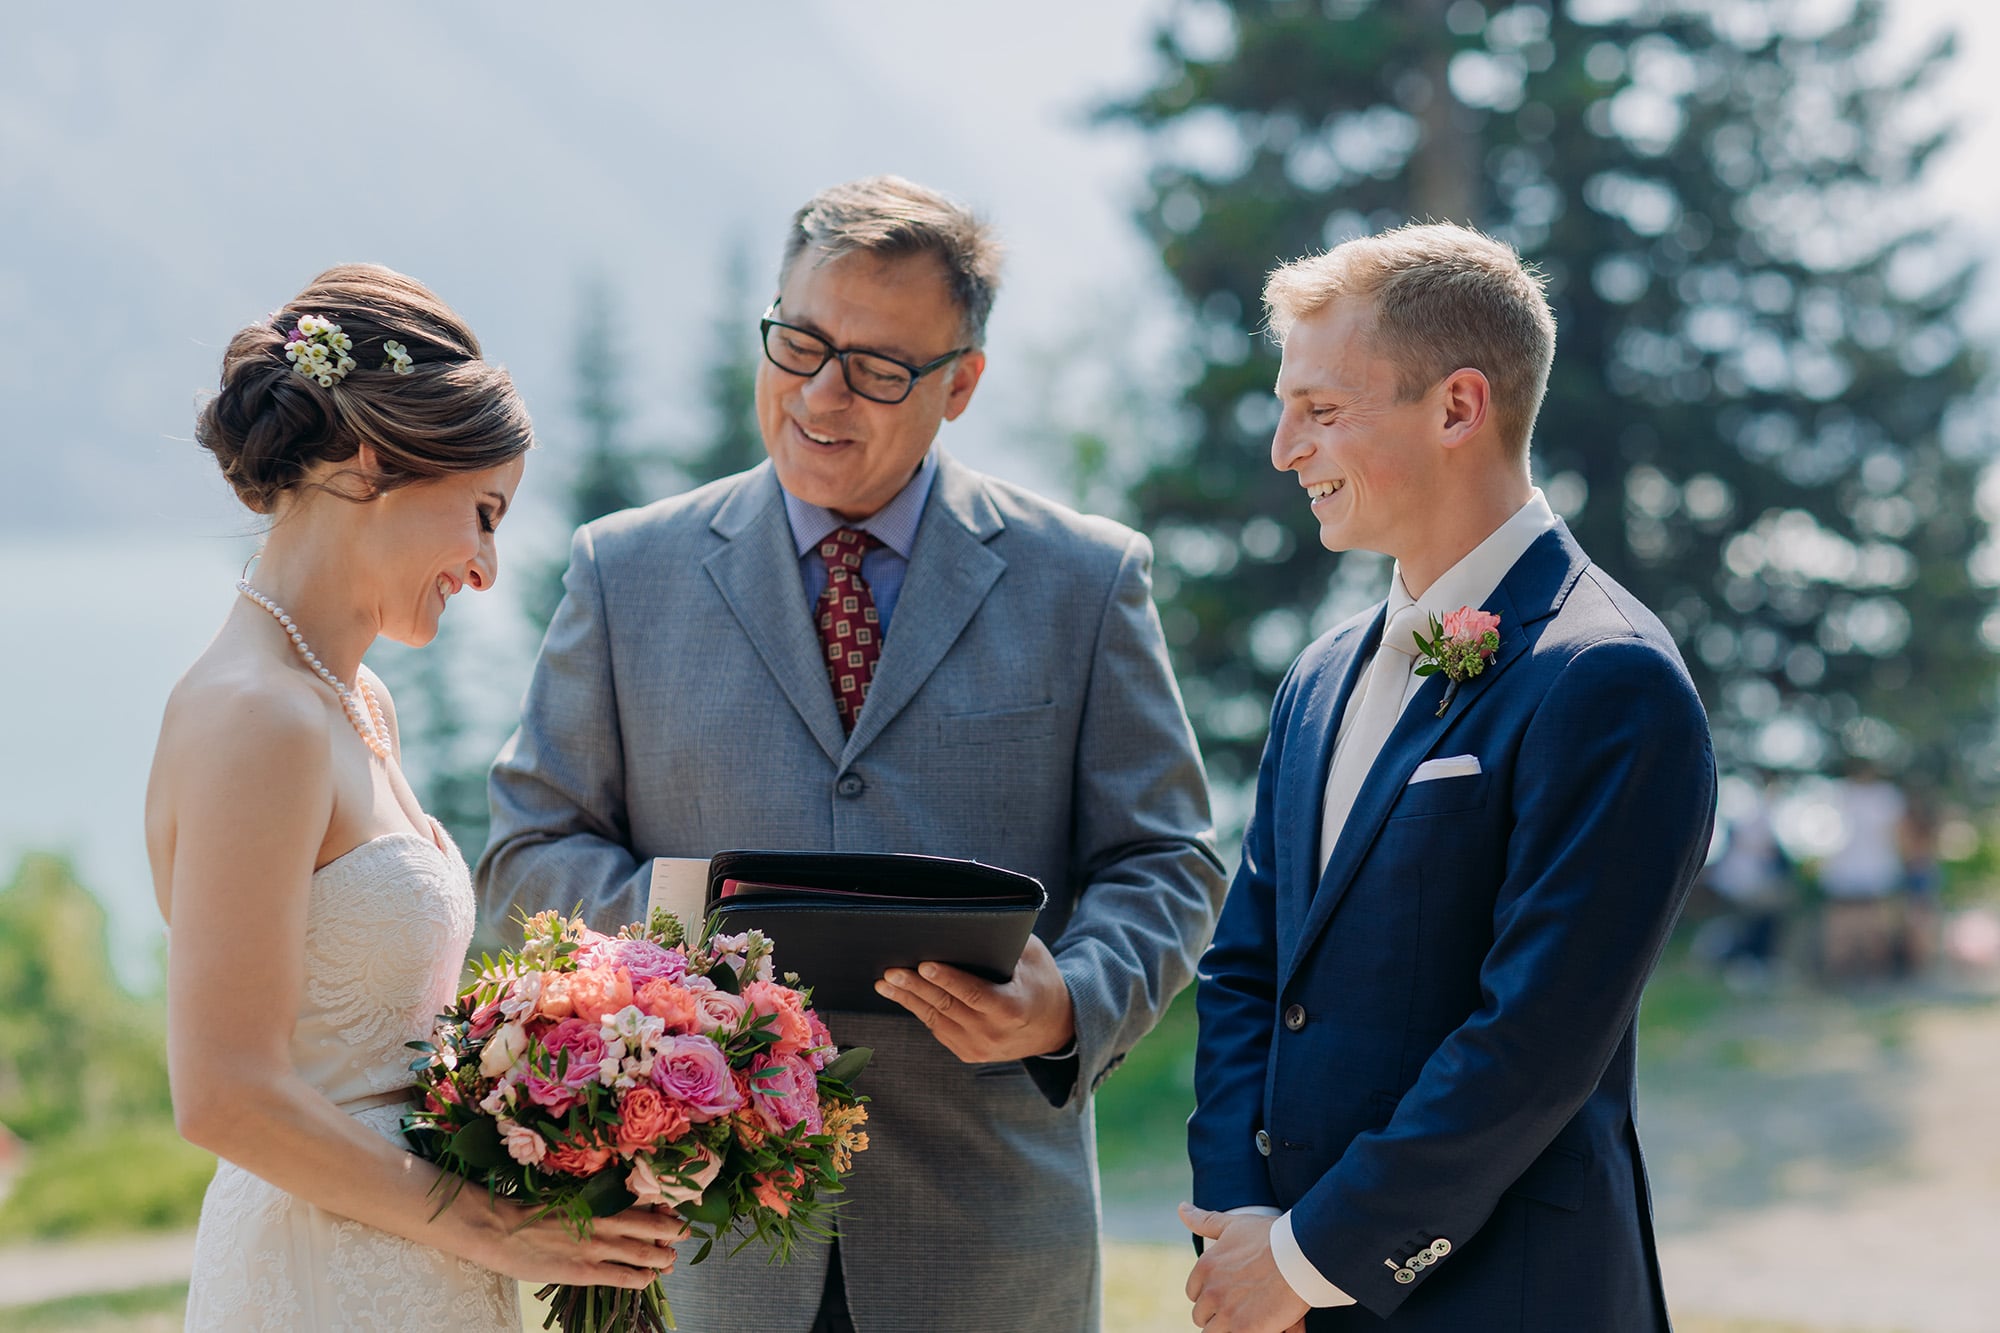 Lake Louise Outdoor wedding ceremony